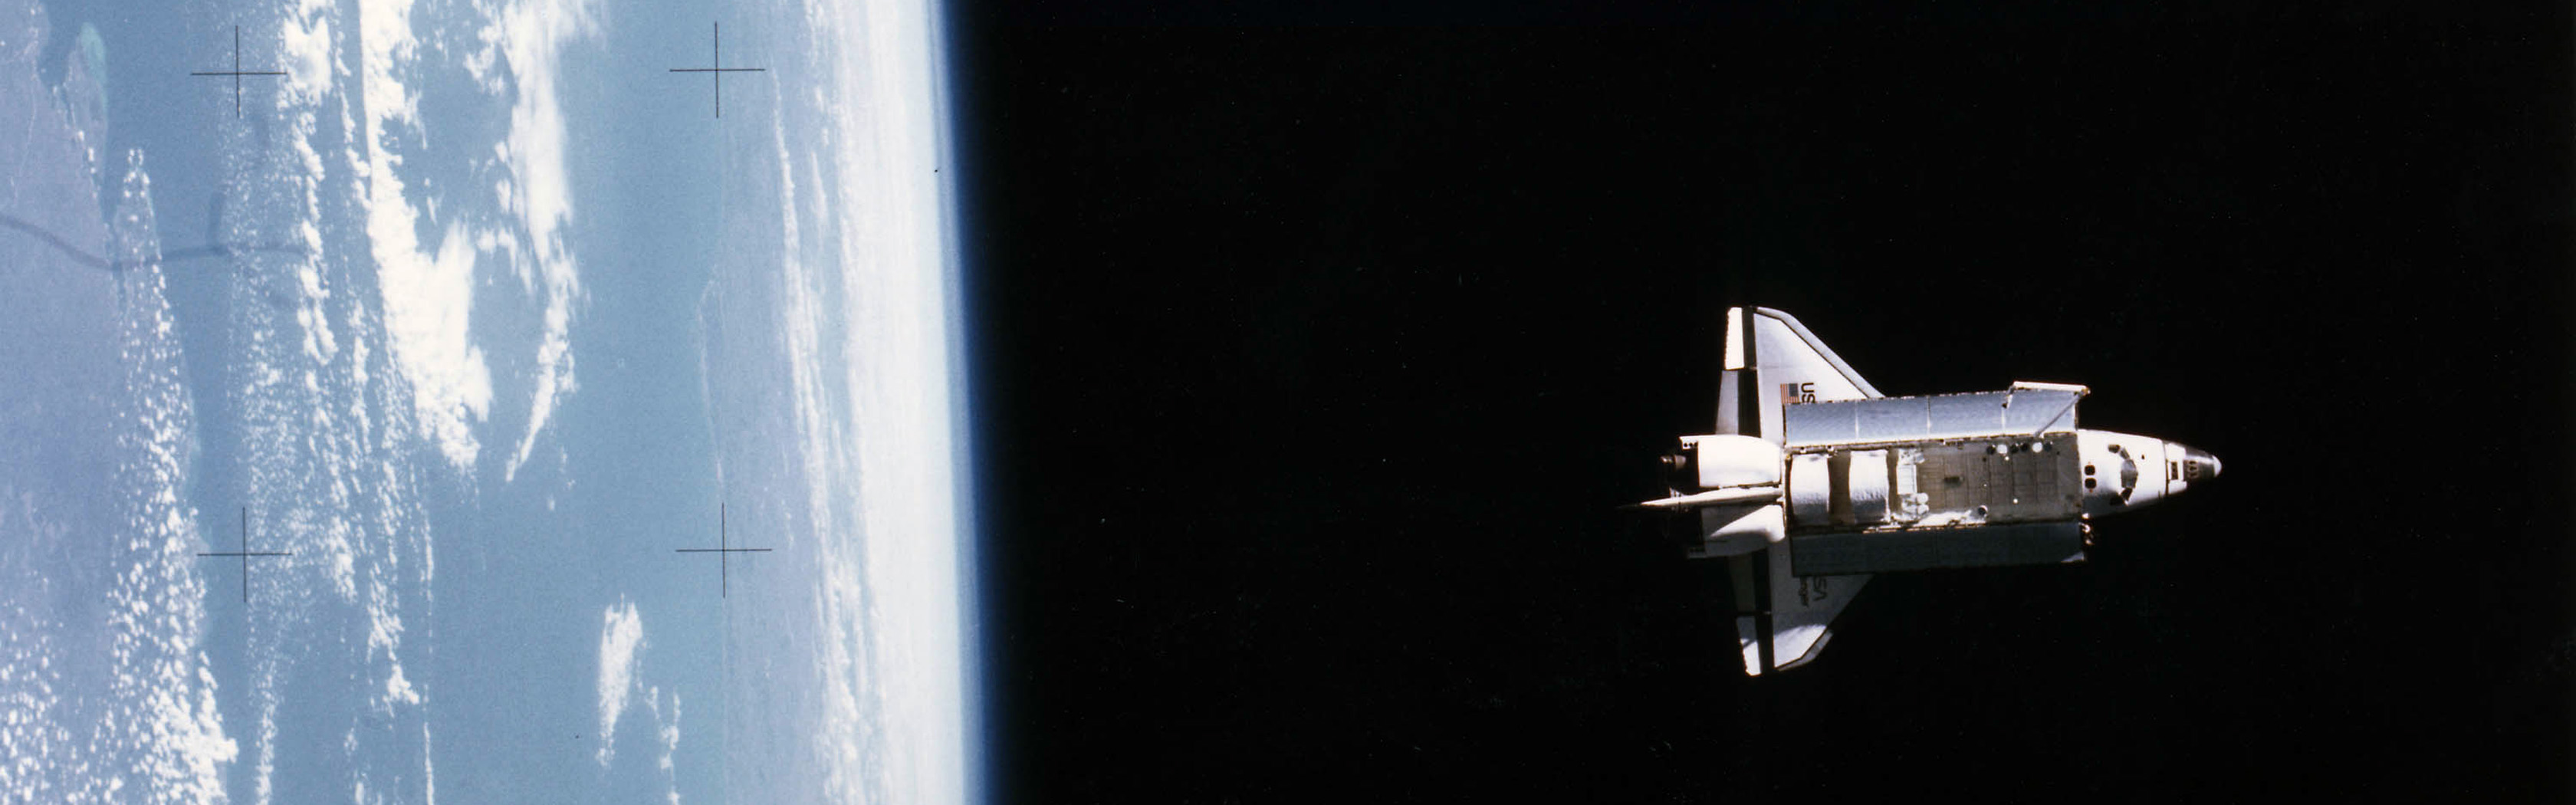 Wallpaper/desktop - Space Shuttles Orbiting Earth - HD Wallpaper 